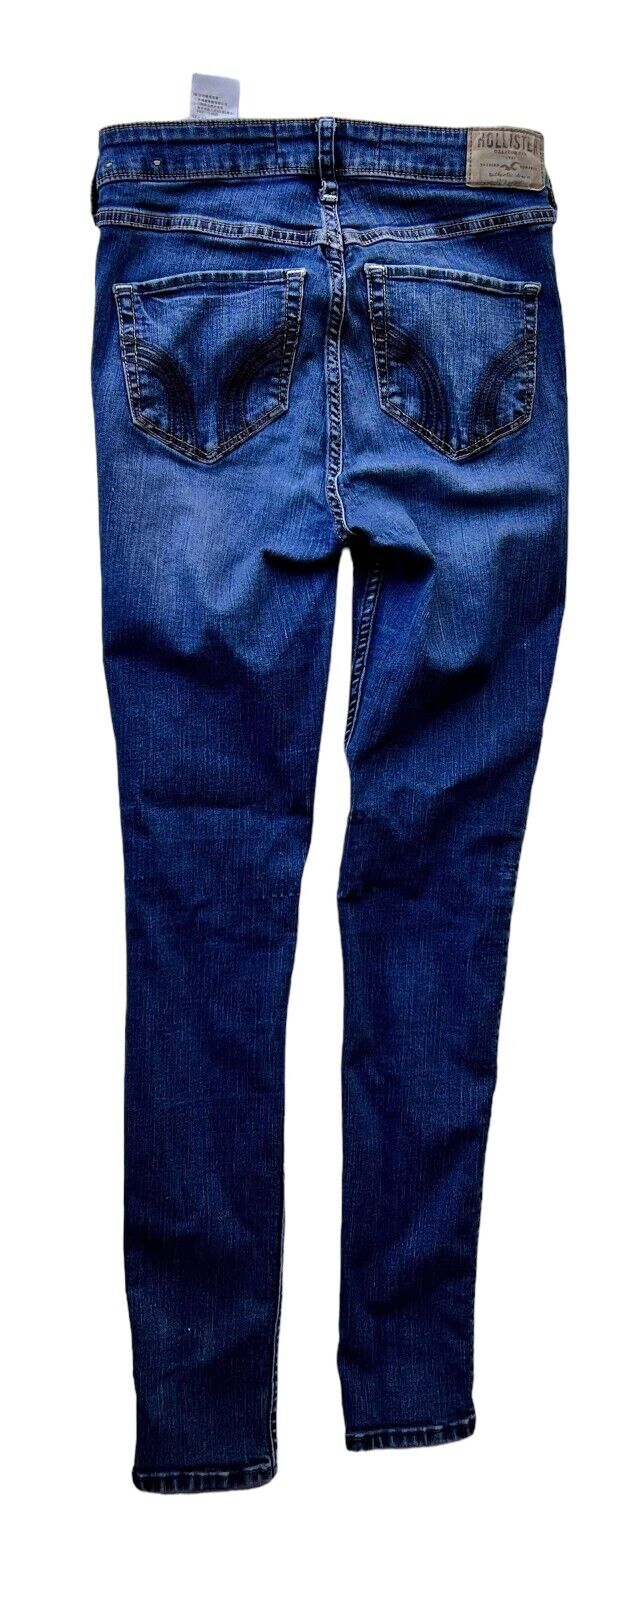 Hollister Jeans Bottoms Woman's Junior Size 1S S … - image 1